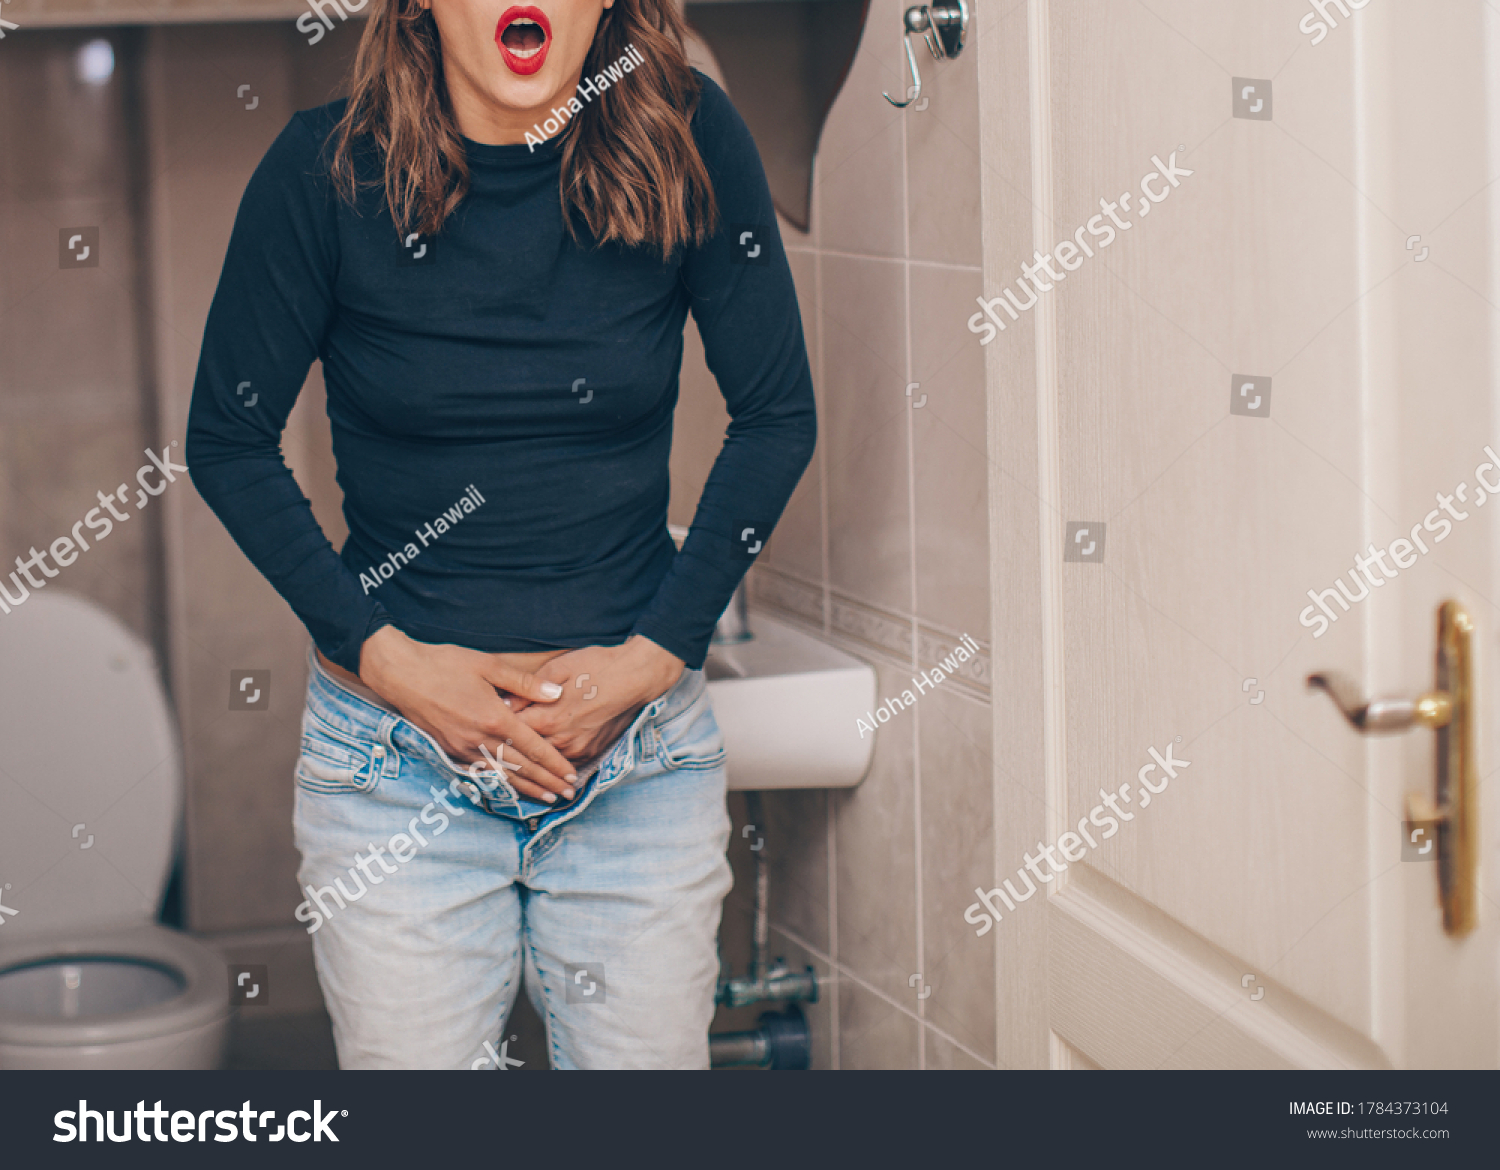 22 470 Diarrhea Woman Images Stock Photos Vectors Shutterstock